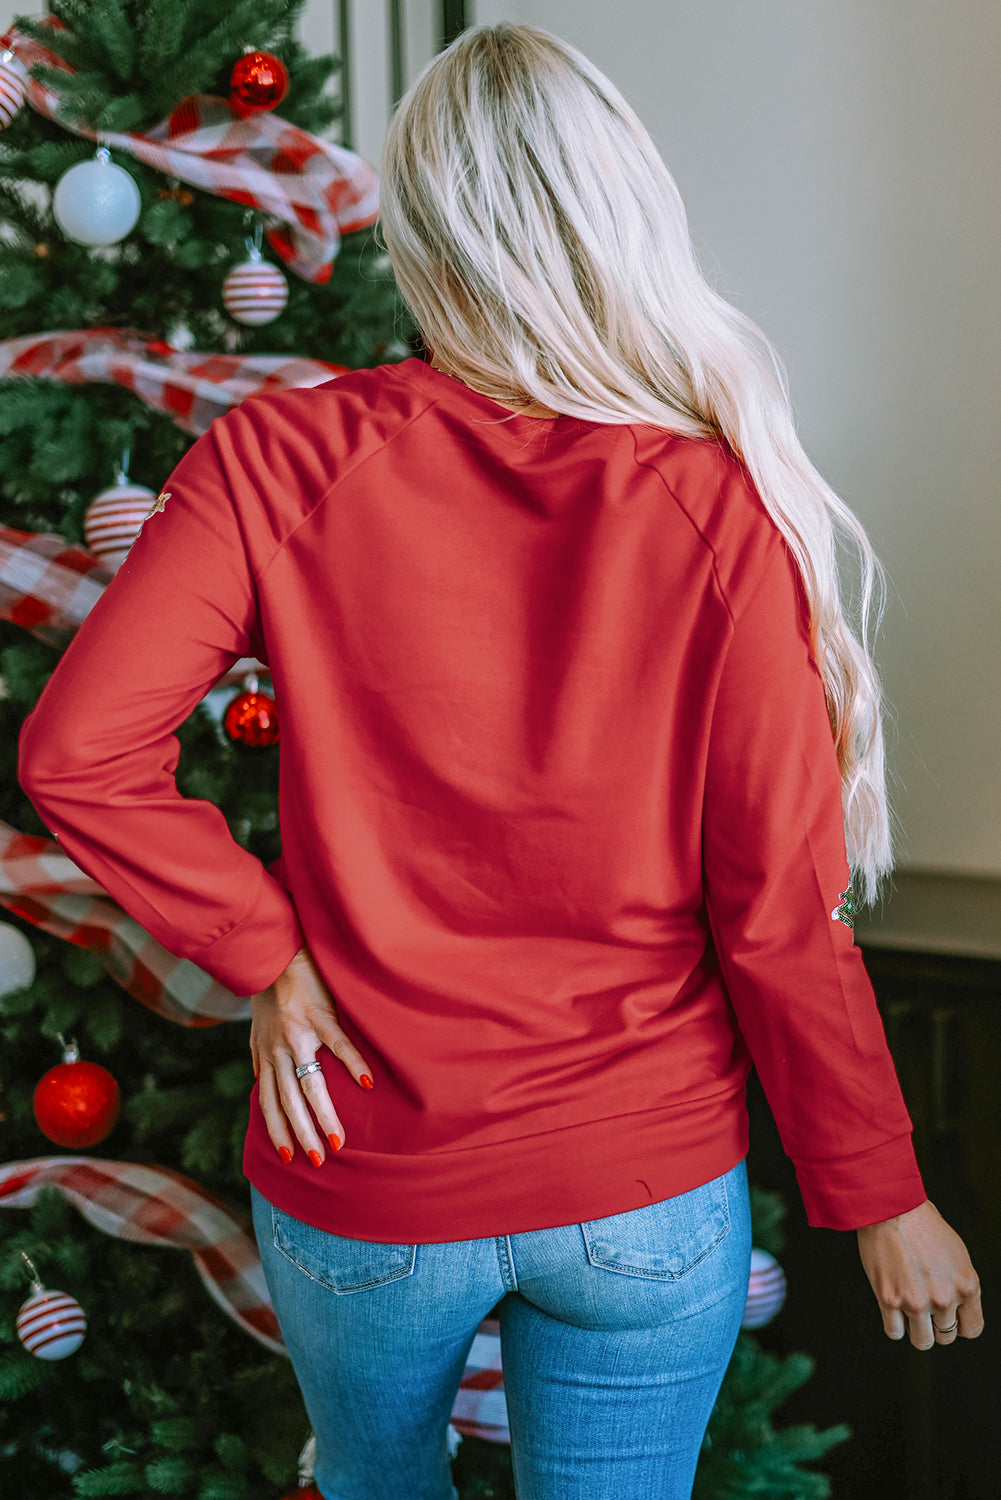 Fiery Red Sequined Christmas Tree Raglan Sleeve Sweatshirt Graphic Sweatshirts JT's Designer Fashion